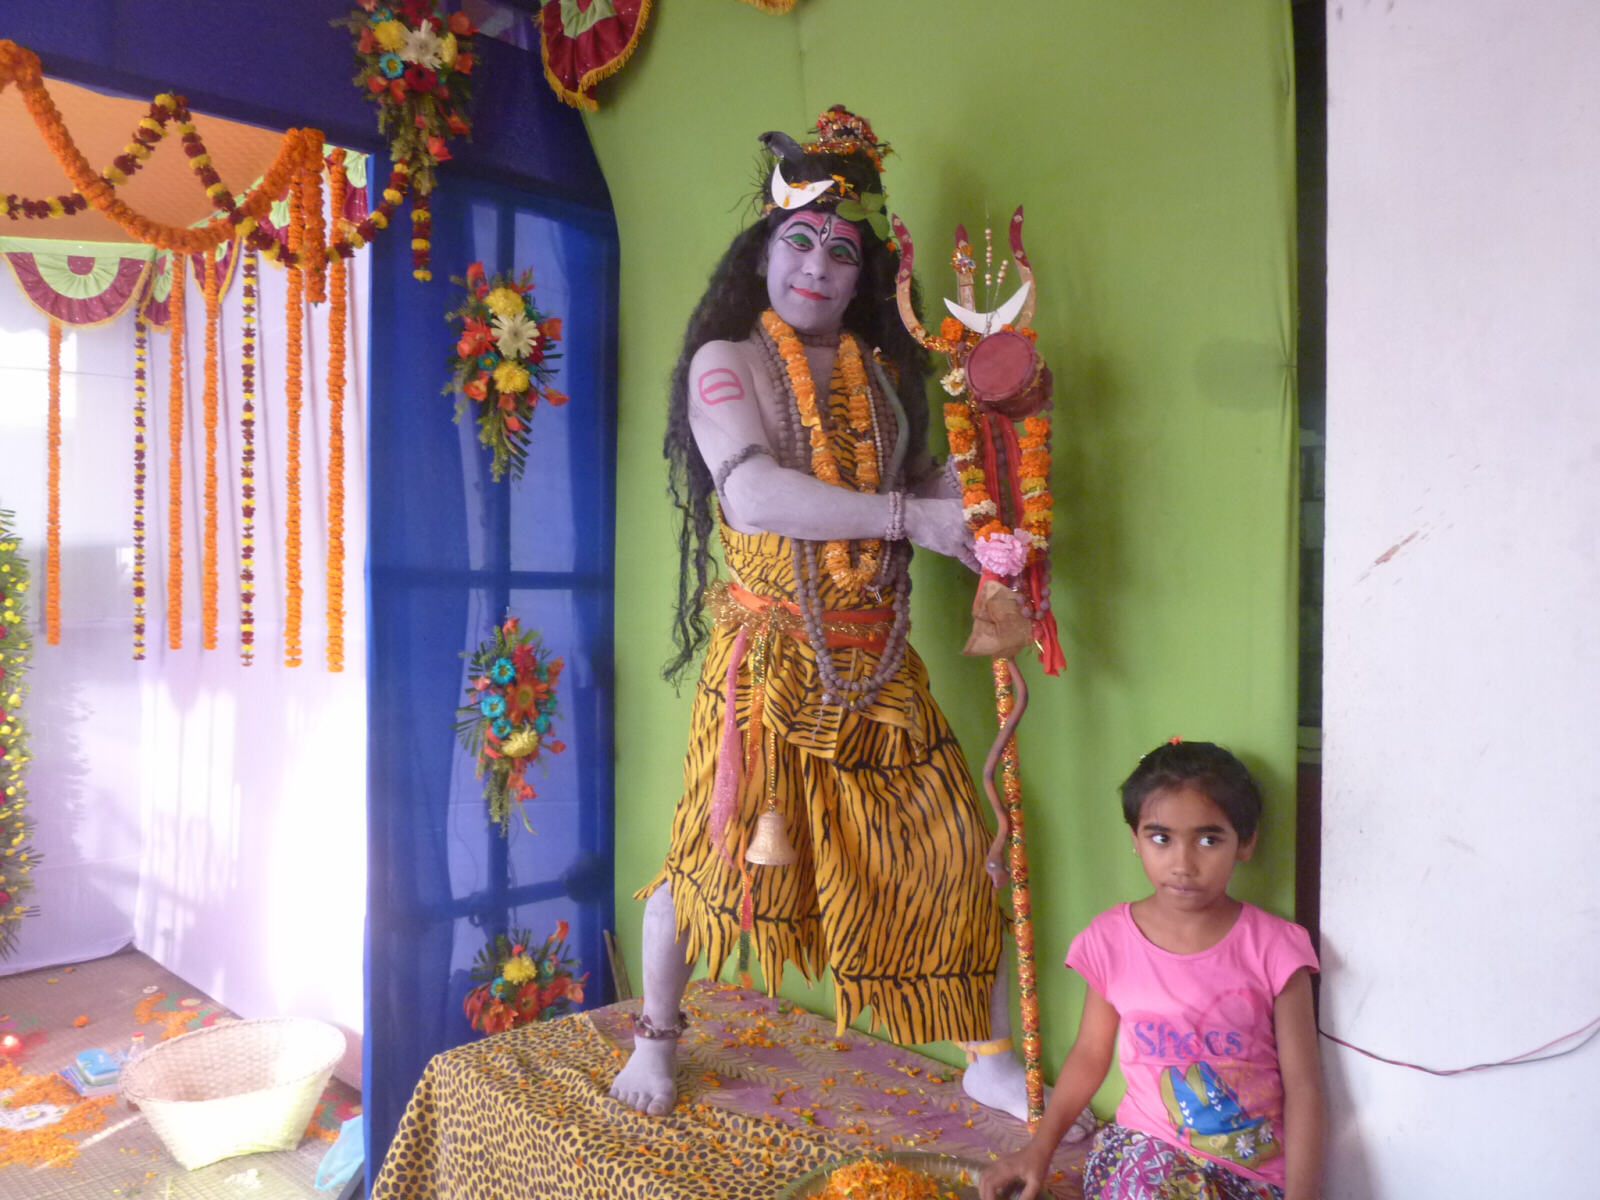 Living Shiva statue at a festival in Agartala, India